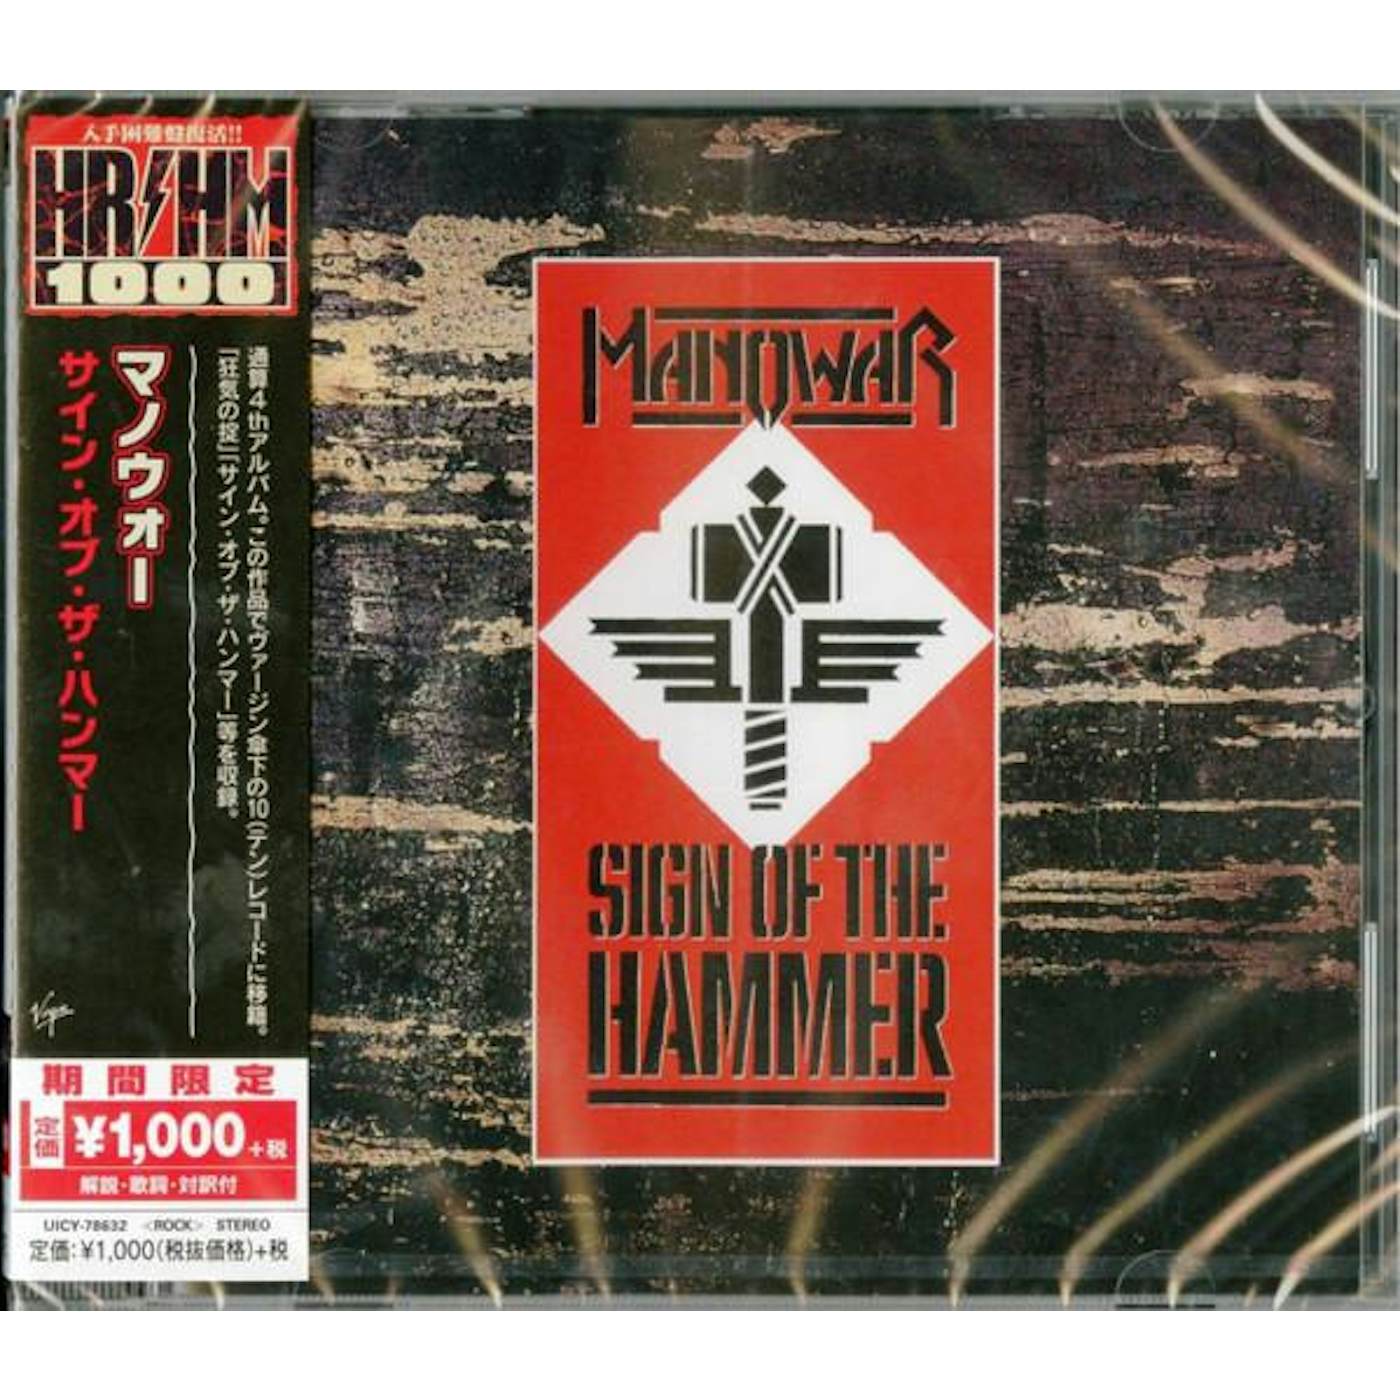 Manowar SIGN OF THE HAMMER CD